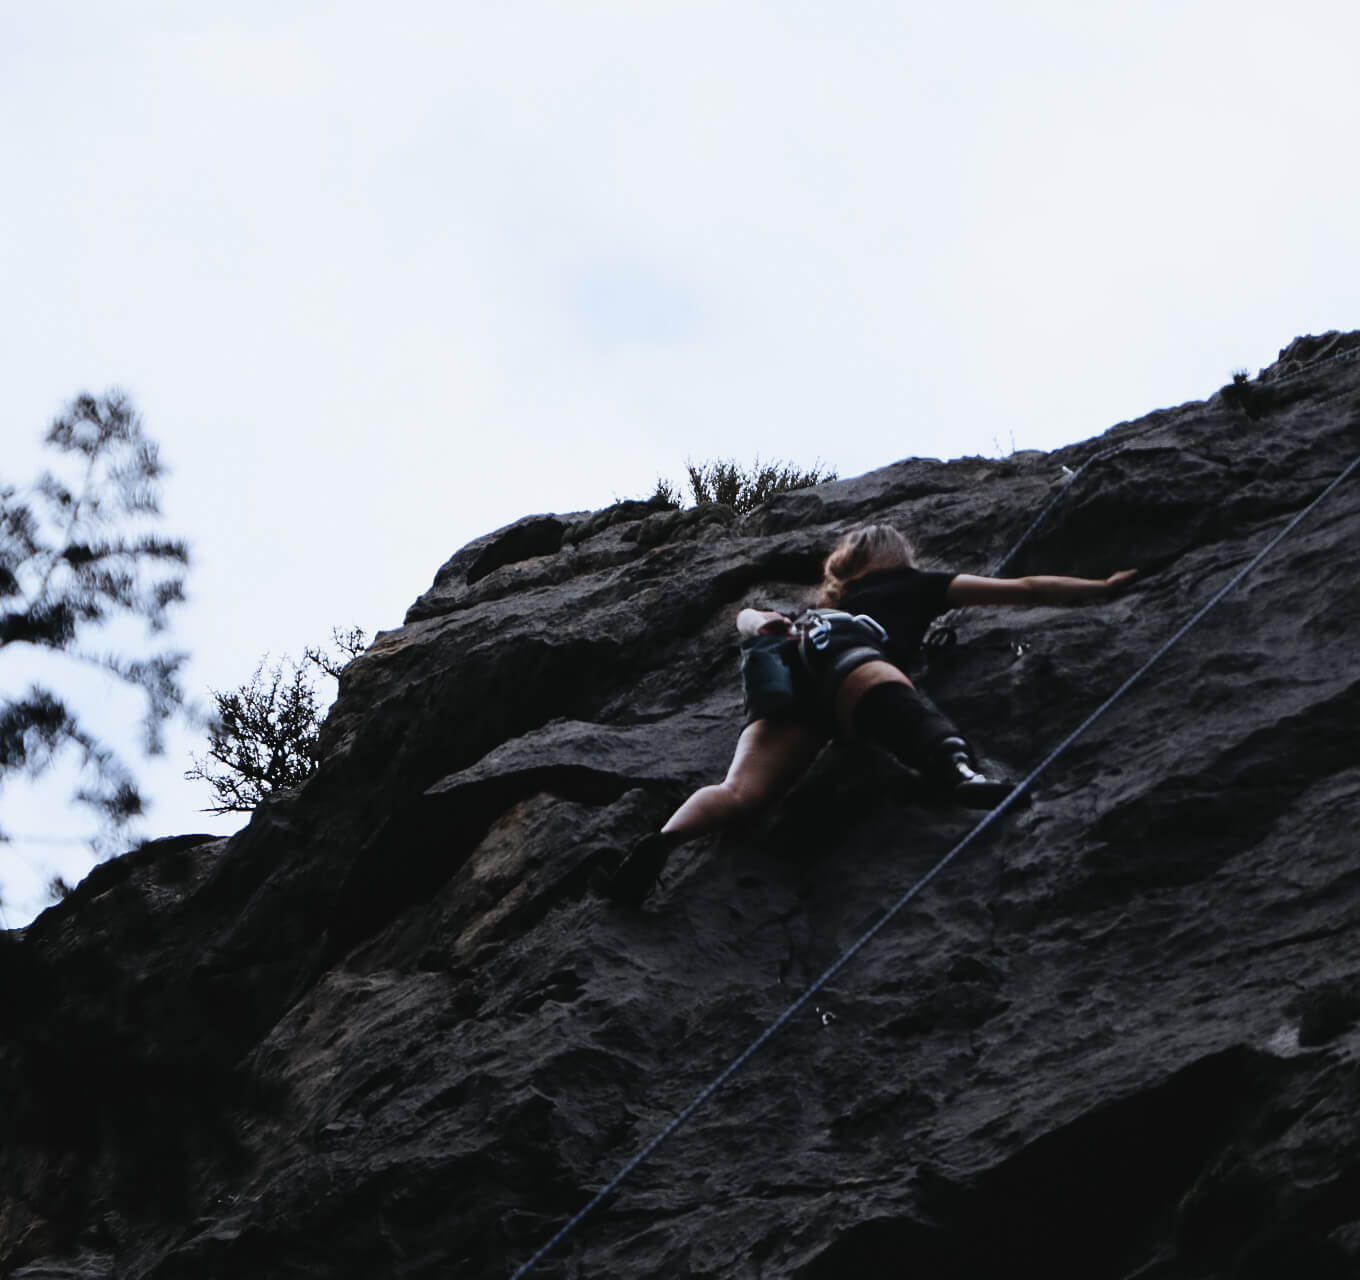 Cail Soria rockclimbing.